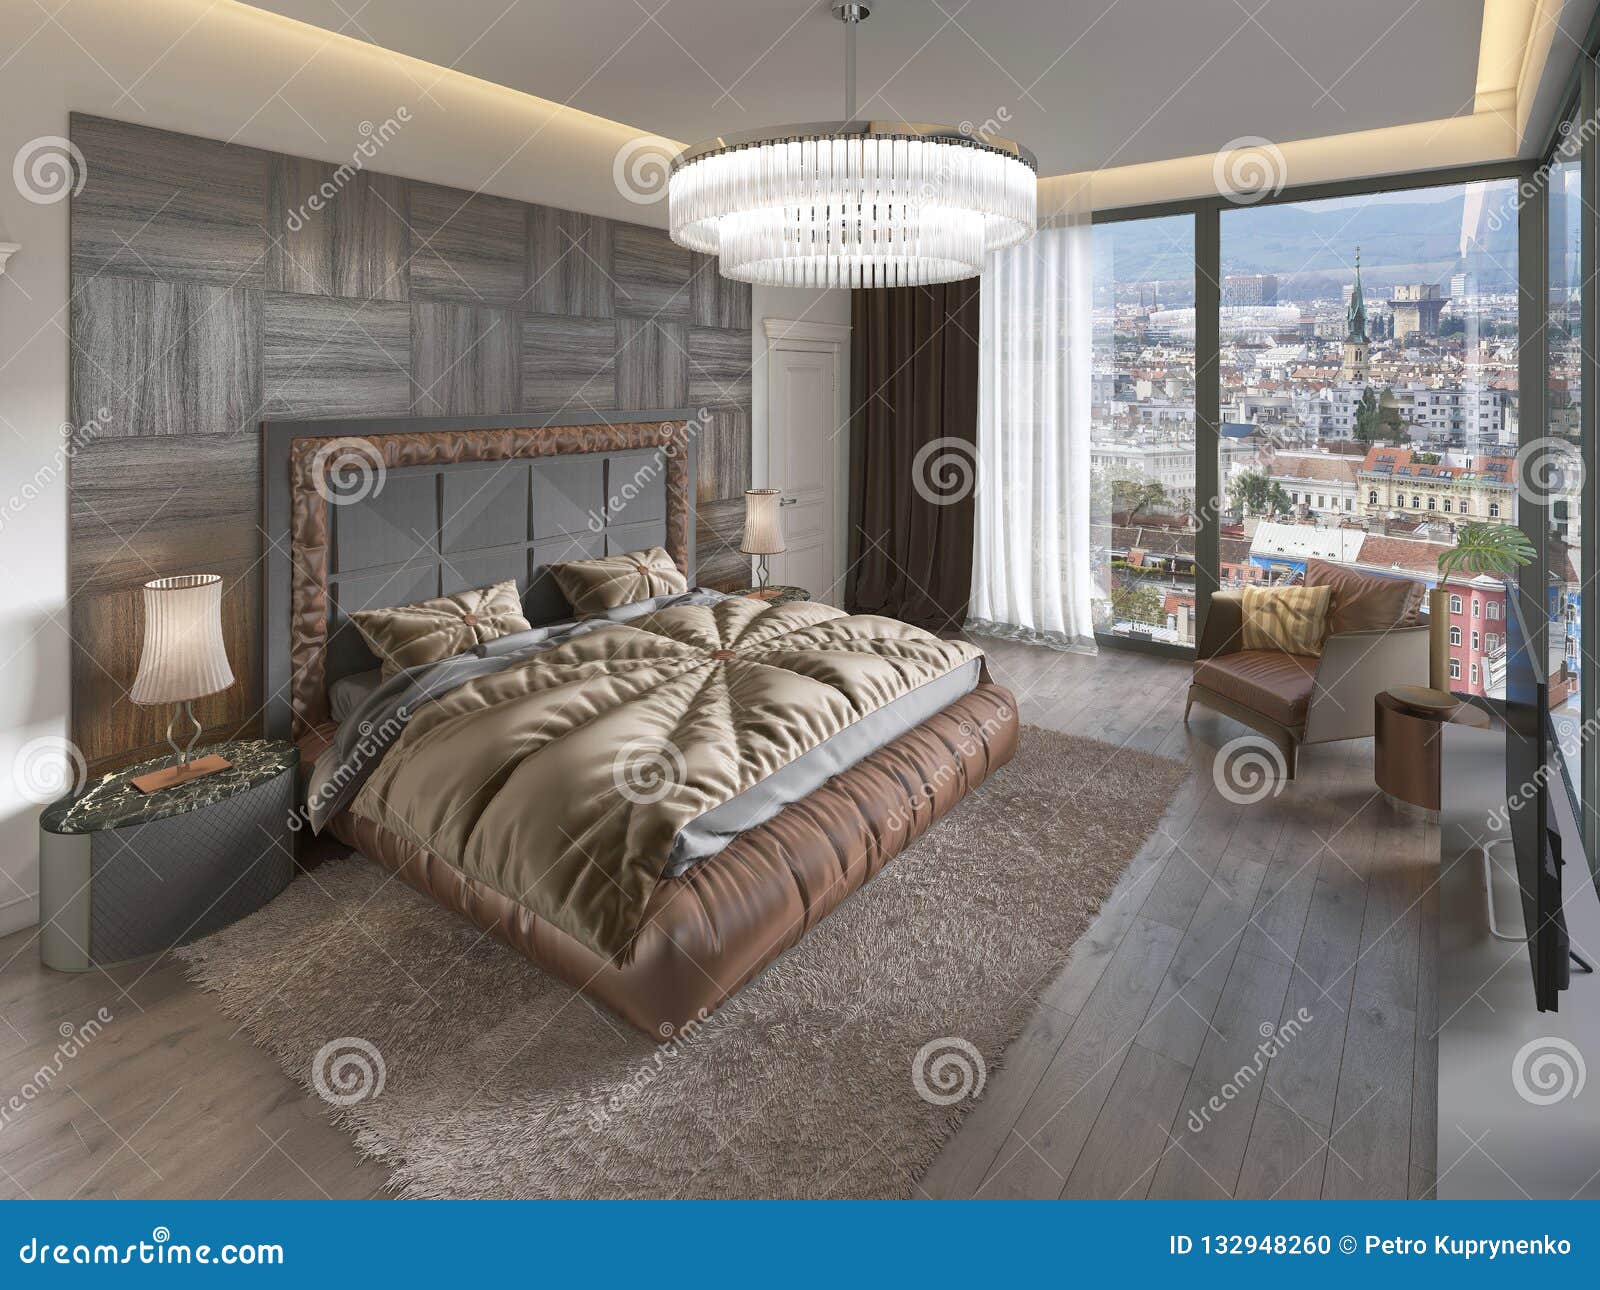 Luxury Bedroom Interior With Fabric Bed Dresser And Nightstands